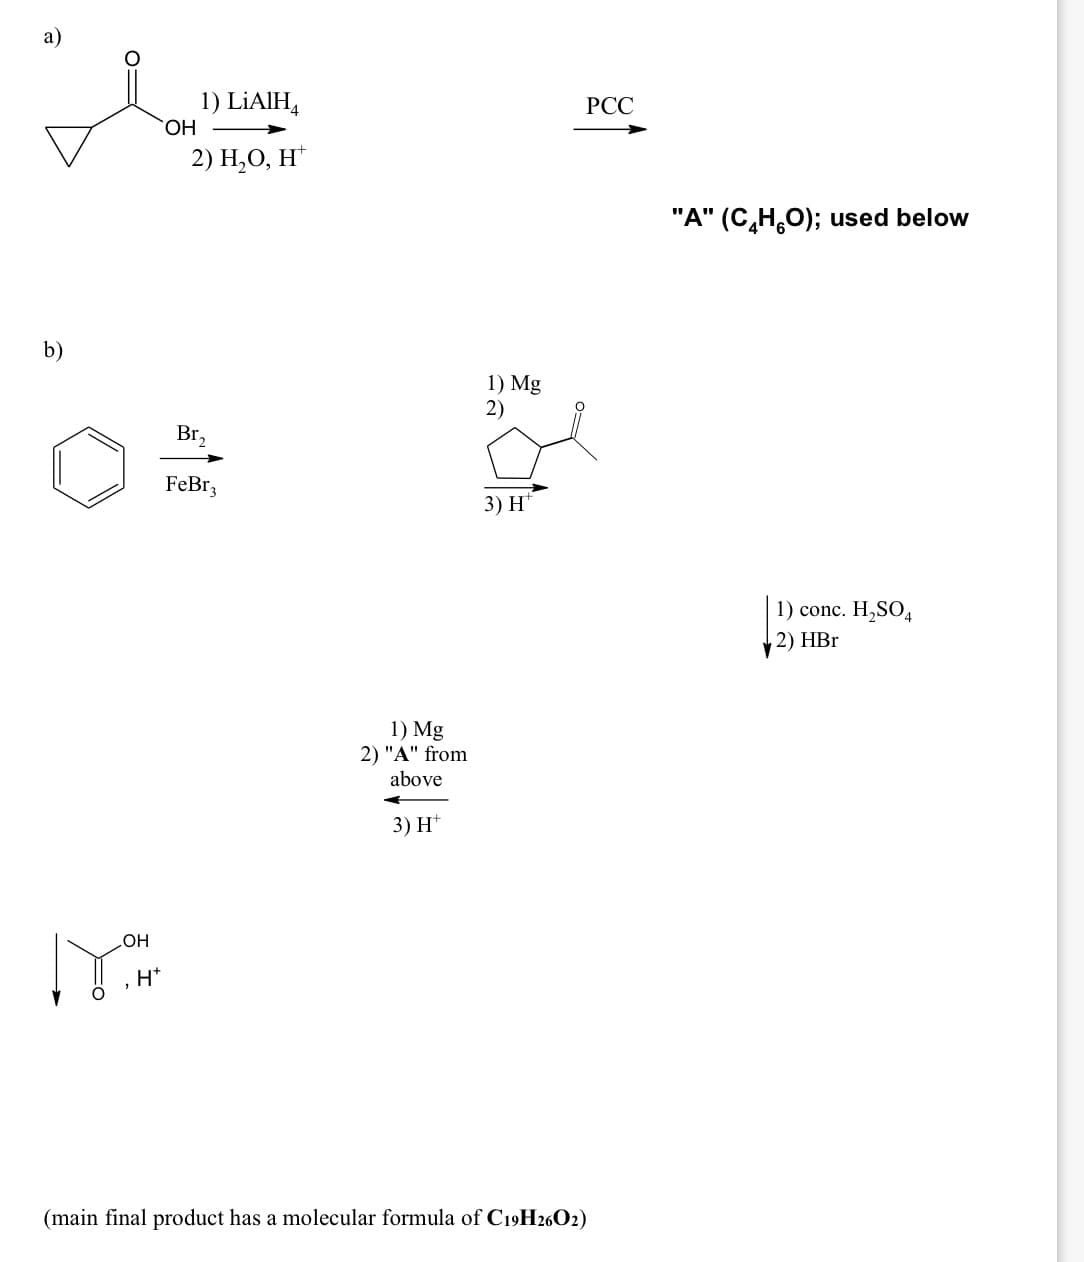 а)
1) LİAIH,
HO,
РСС
2) Н,О, Н"
"A" (C,H,O); used below
b)
1) Mg
2)
Br,
FeBr;
3) H*
1) conc. H,SO4
2) HBr
1) Mg
2) "A" from
above
3) H*
HO
H*
(main final product has a molecular formula of C19H2602)
